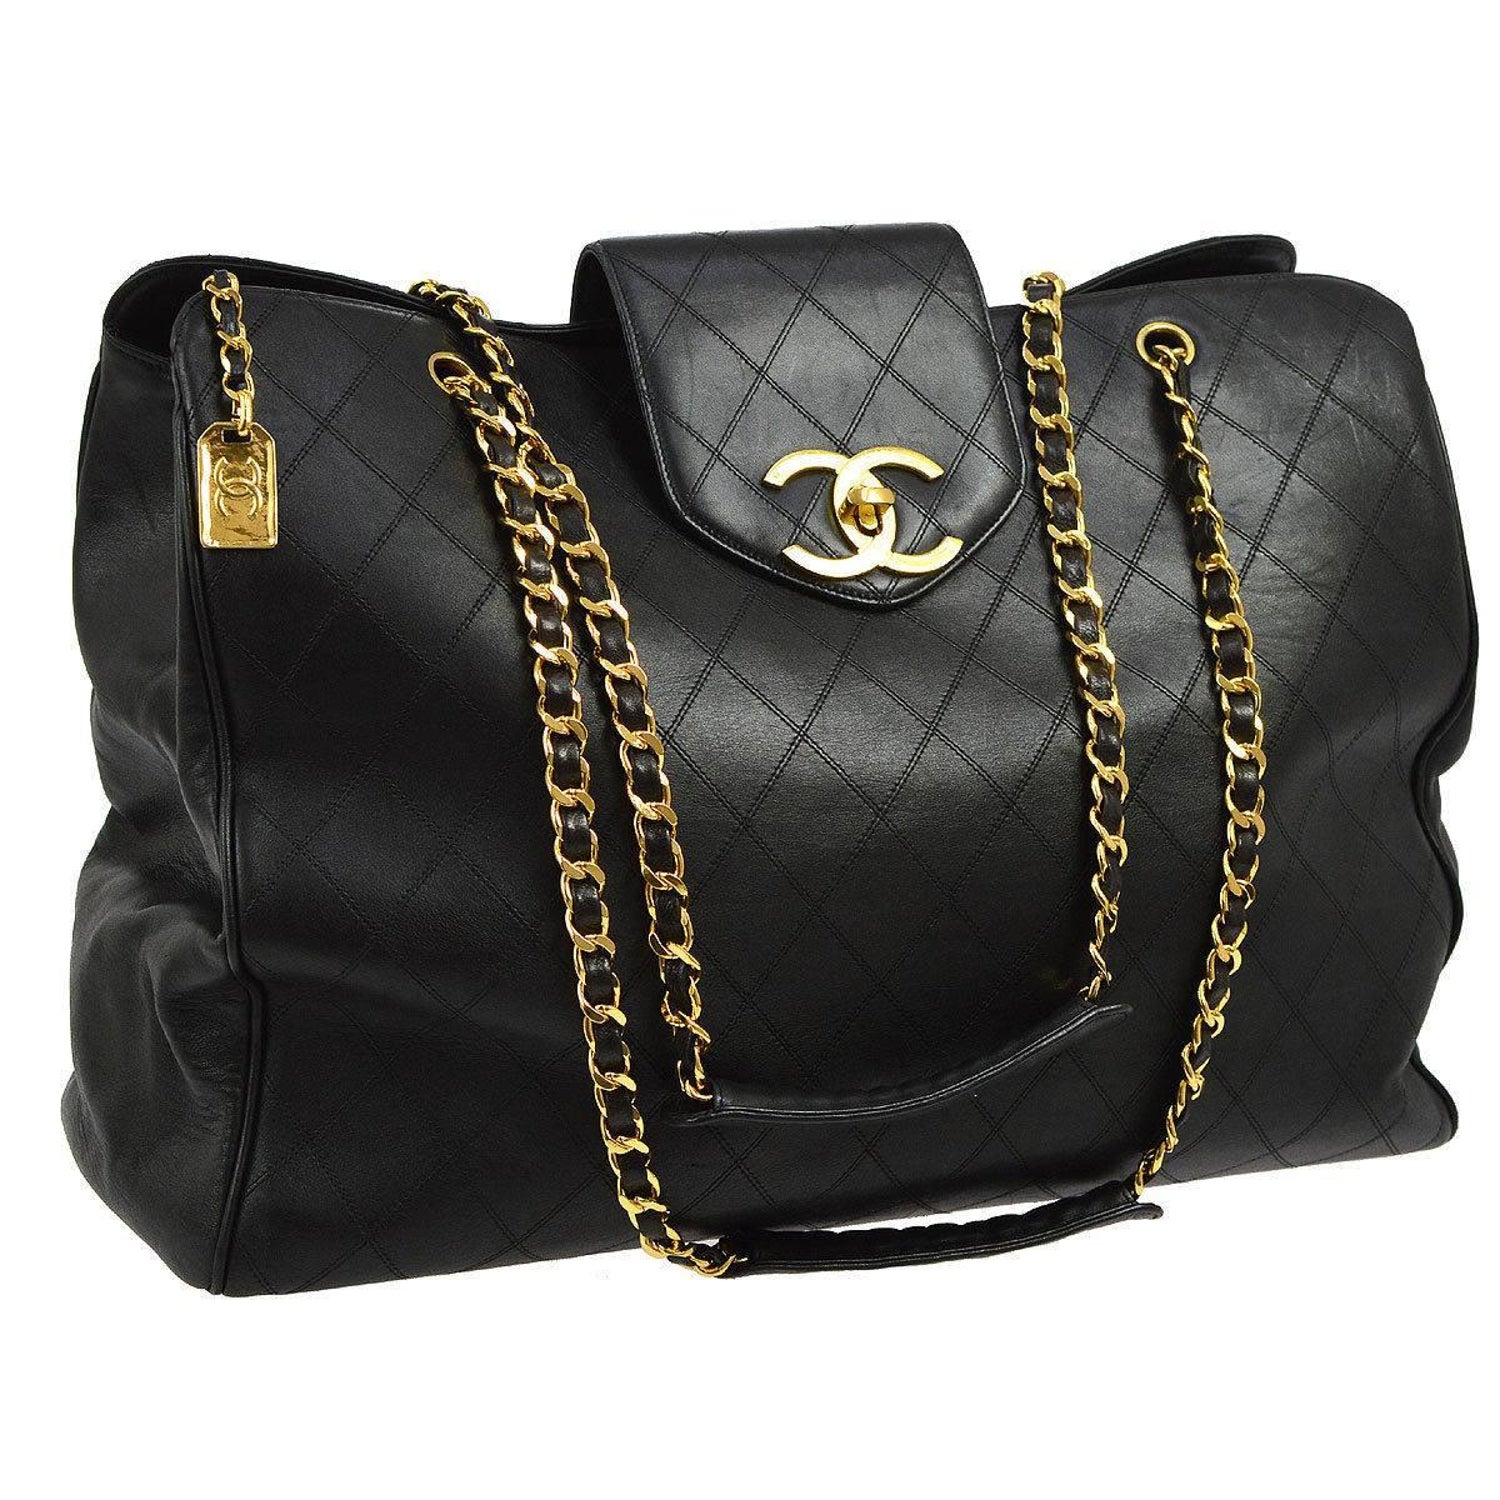 Chanel Black Leather Extra Large Supermodel Weekender Travel